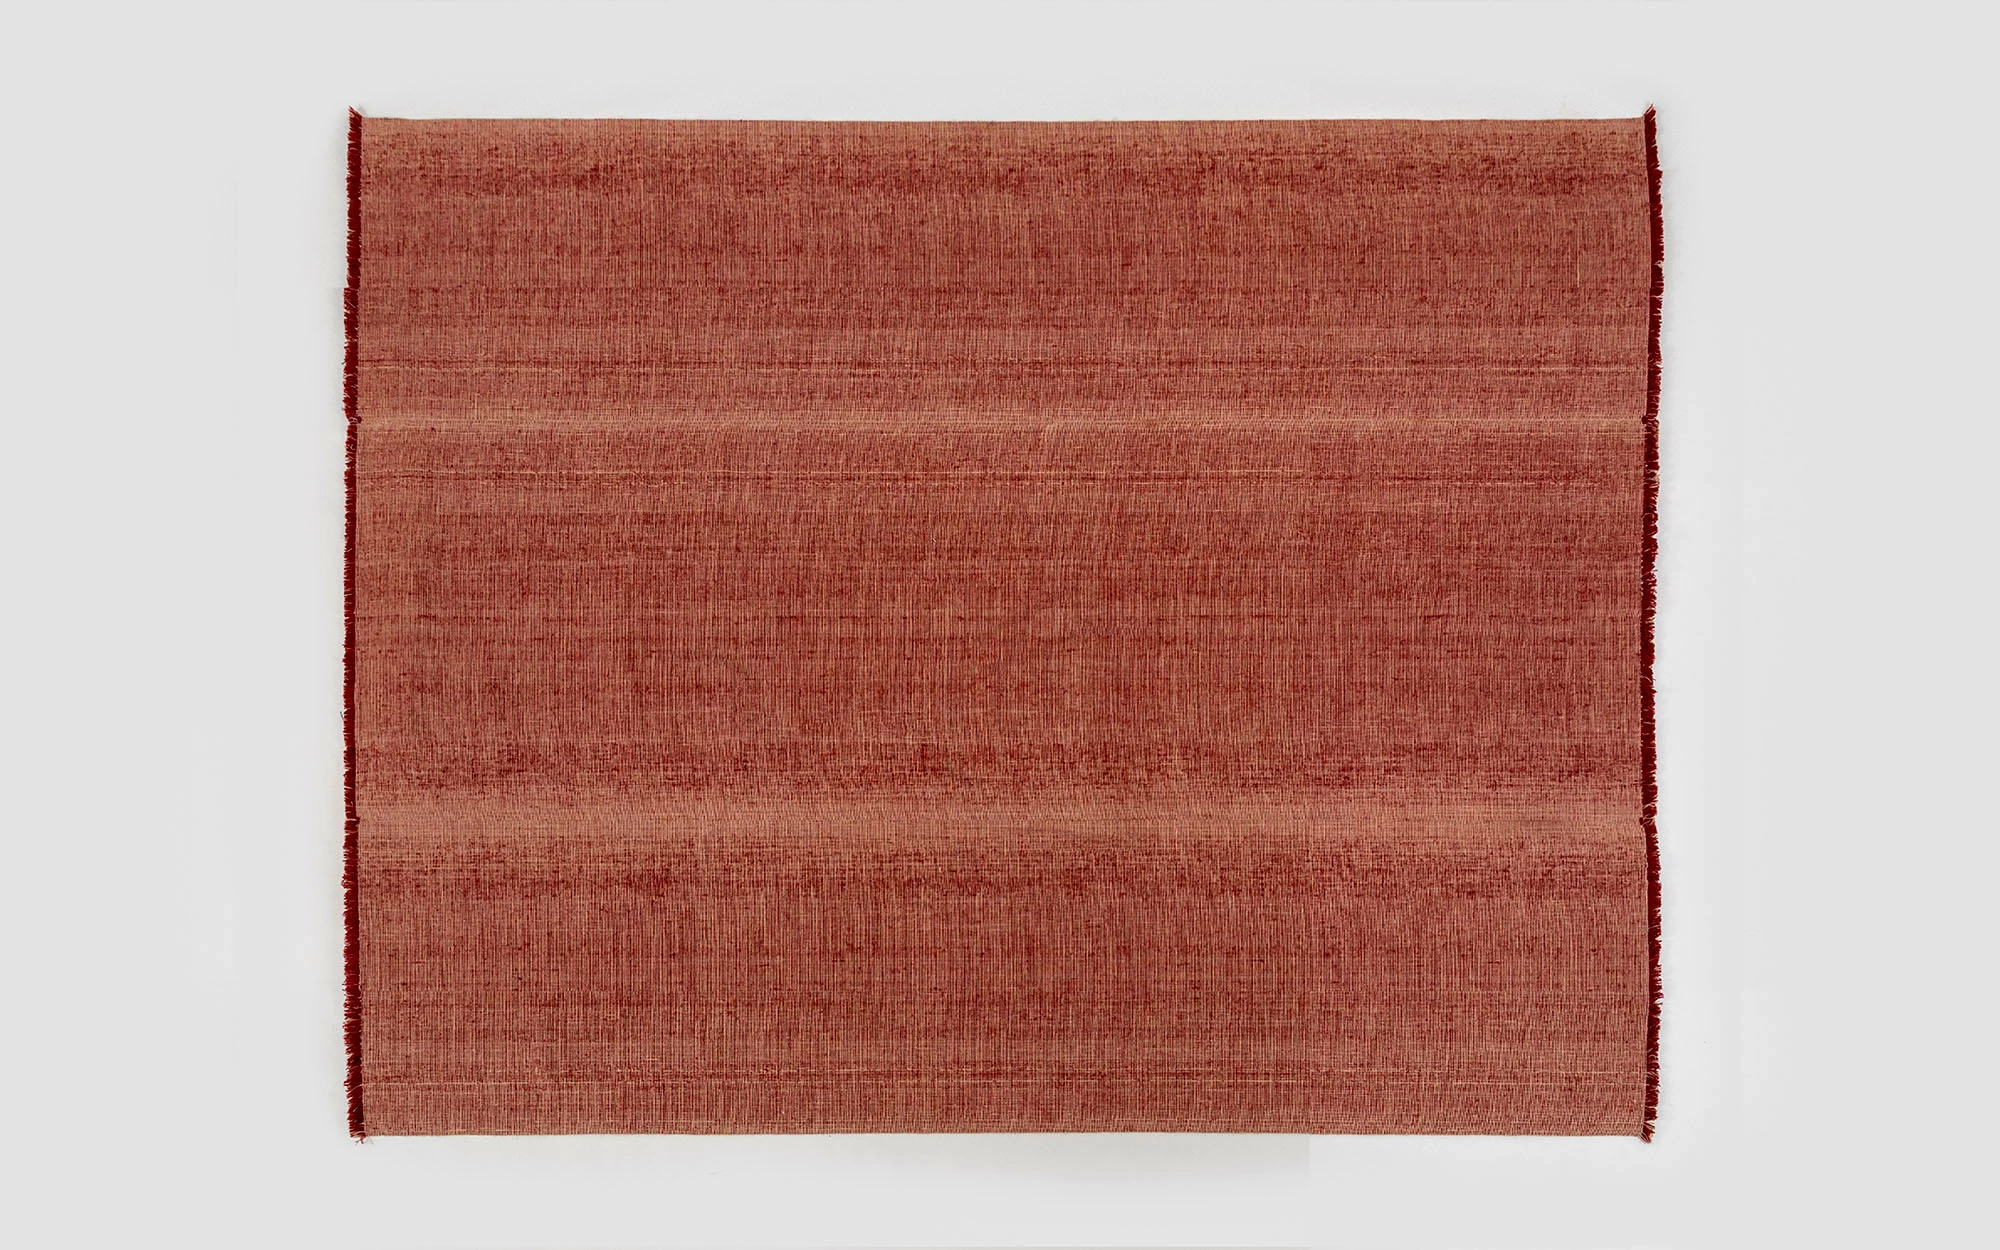 Wilton Carpet S - Ronan & Erwan Bouroullec - Miscellaneous - Galerie kreo